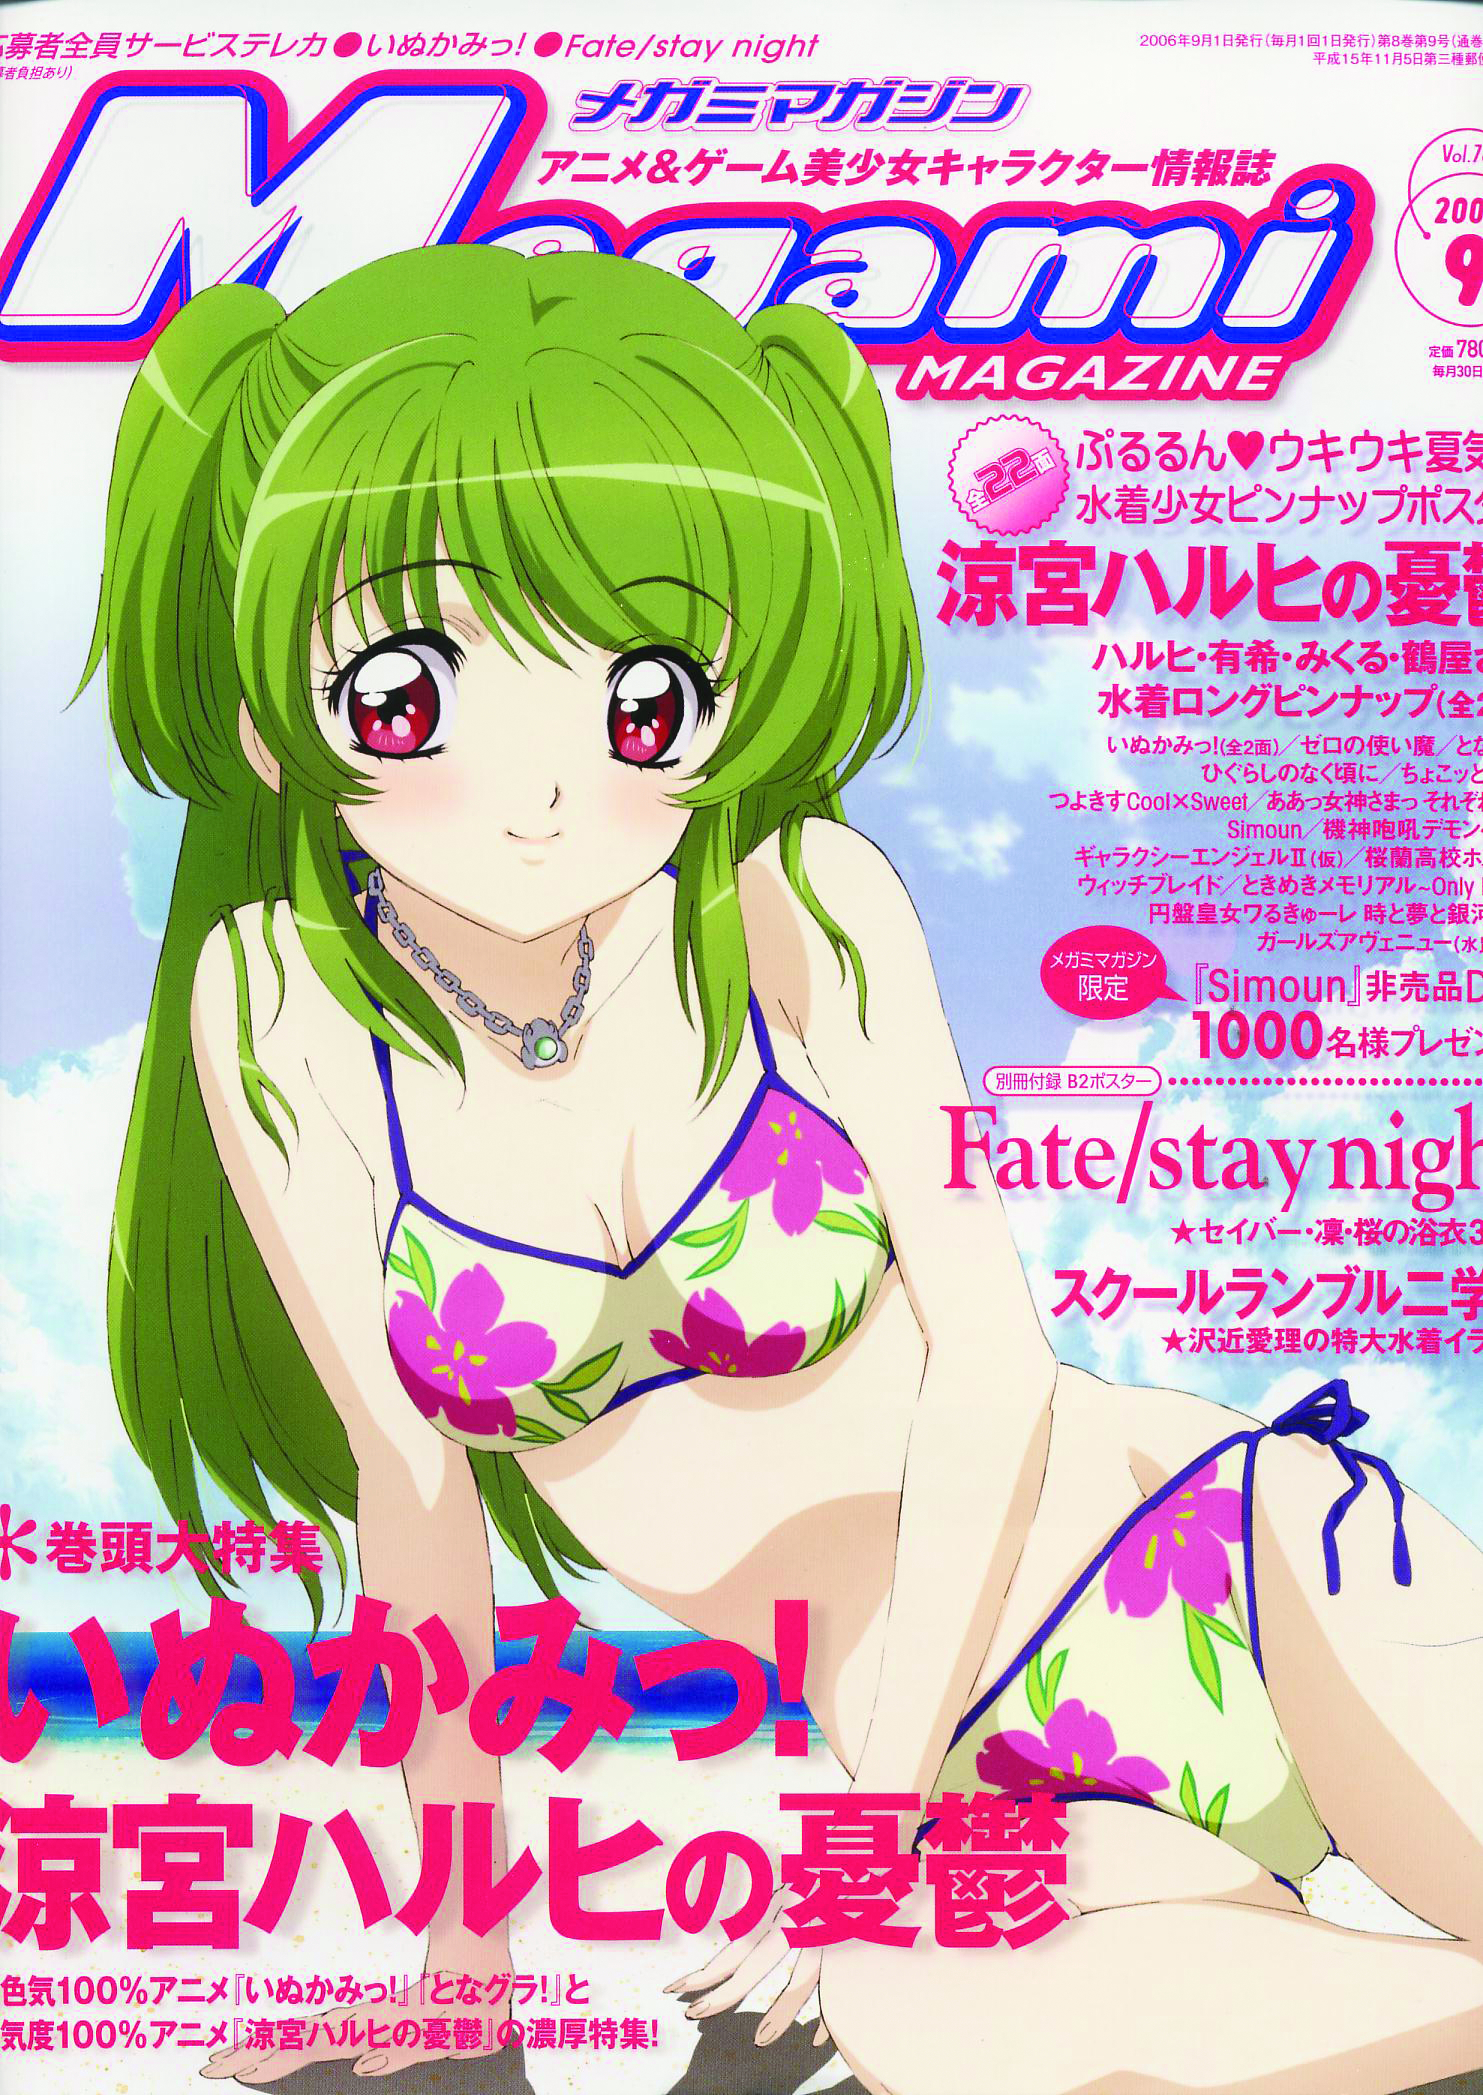 Megami anime Magazine